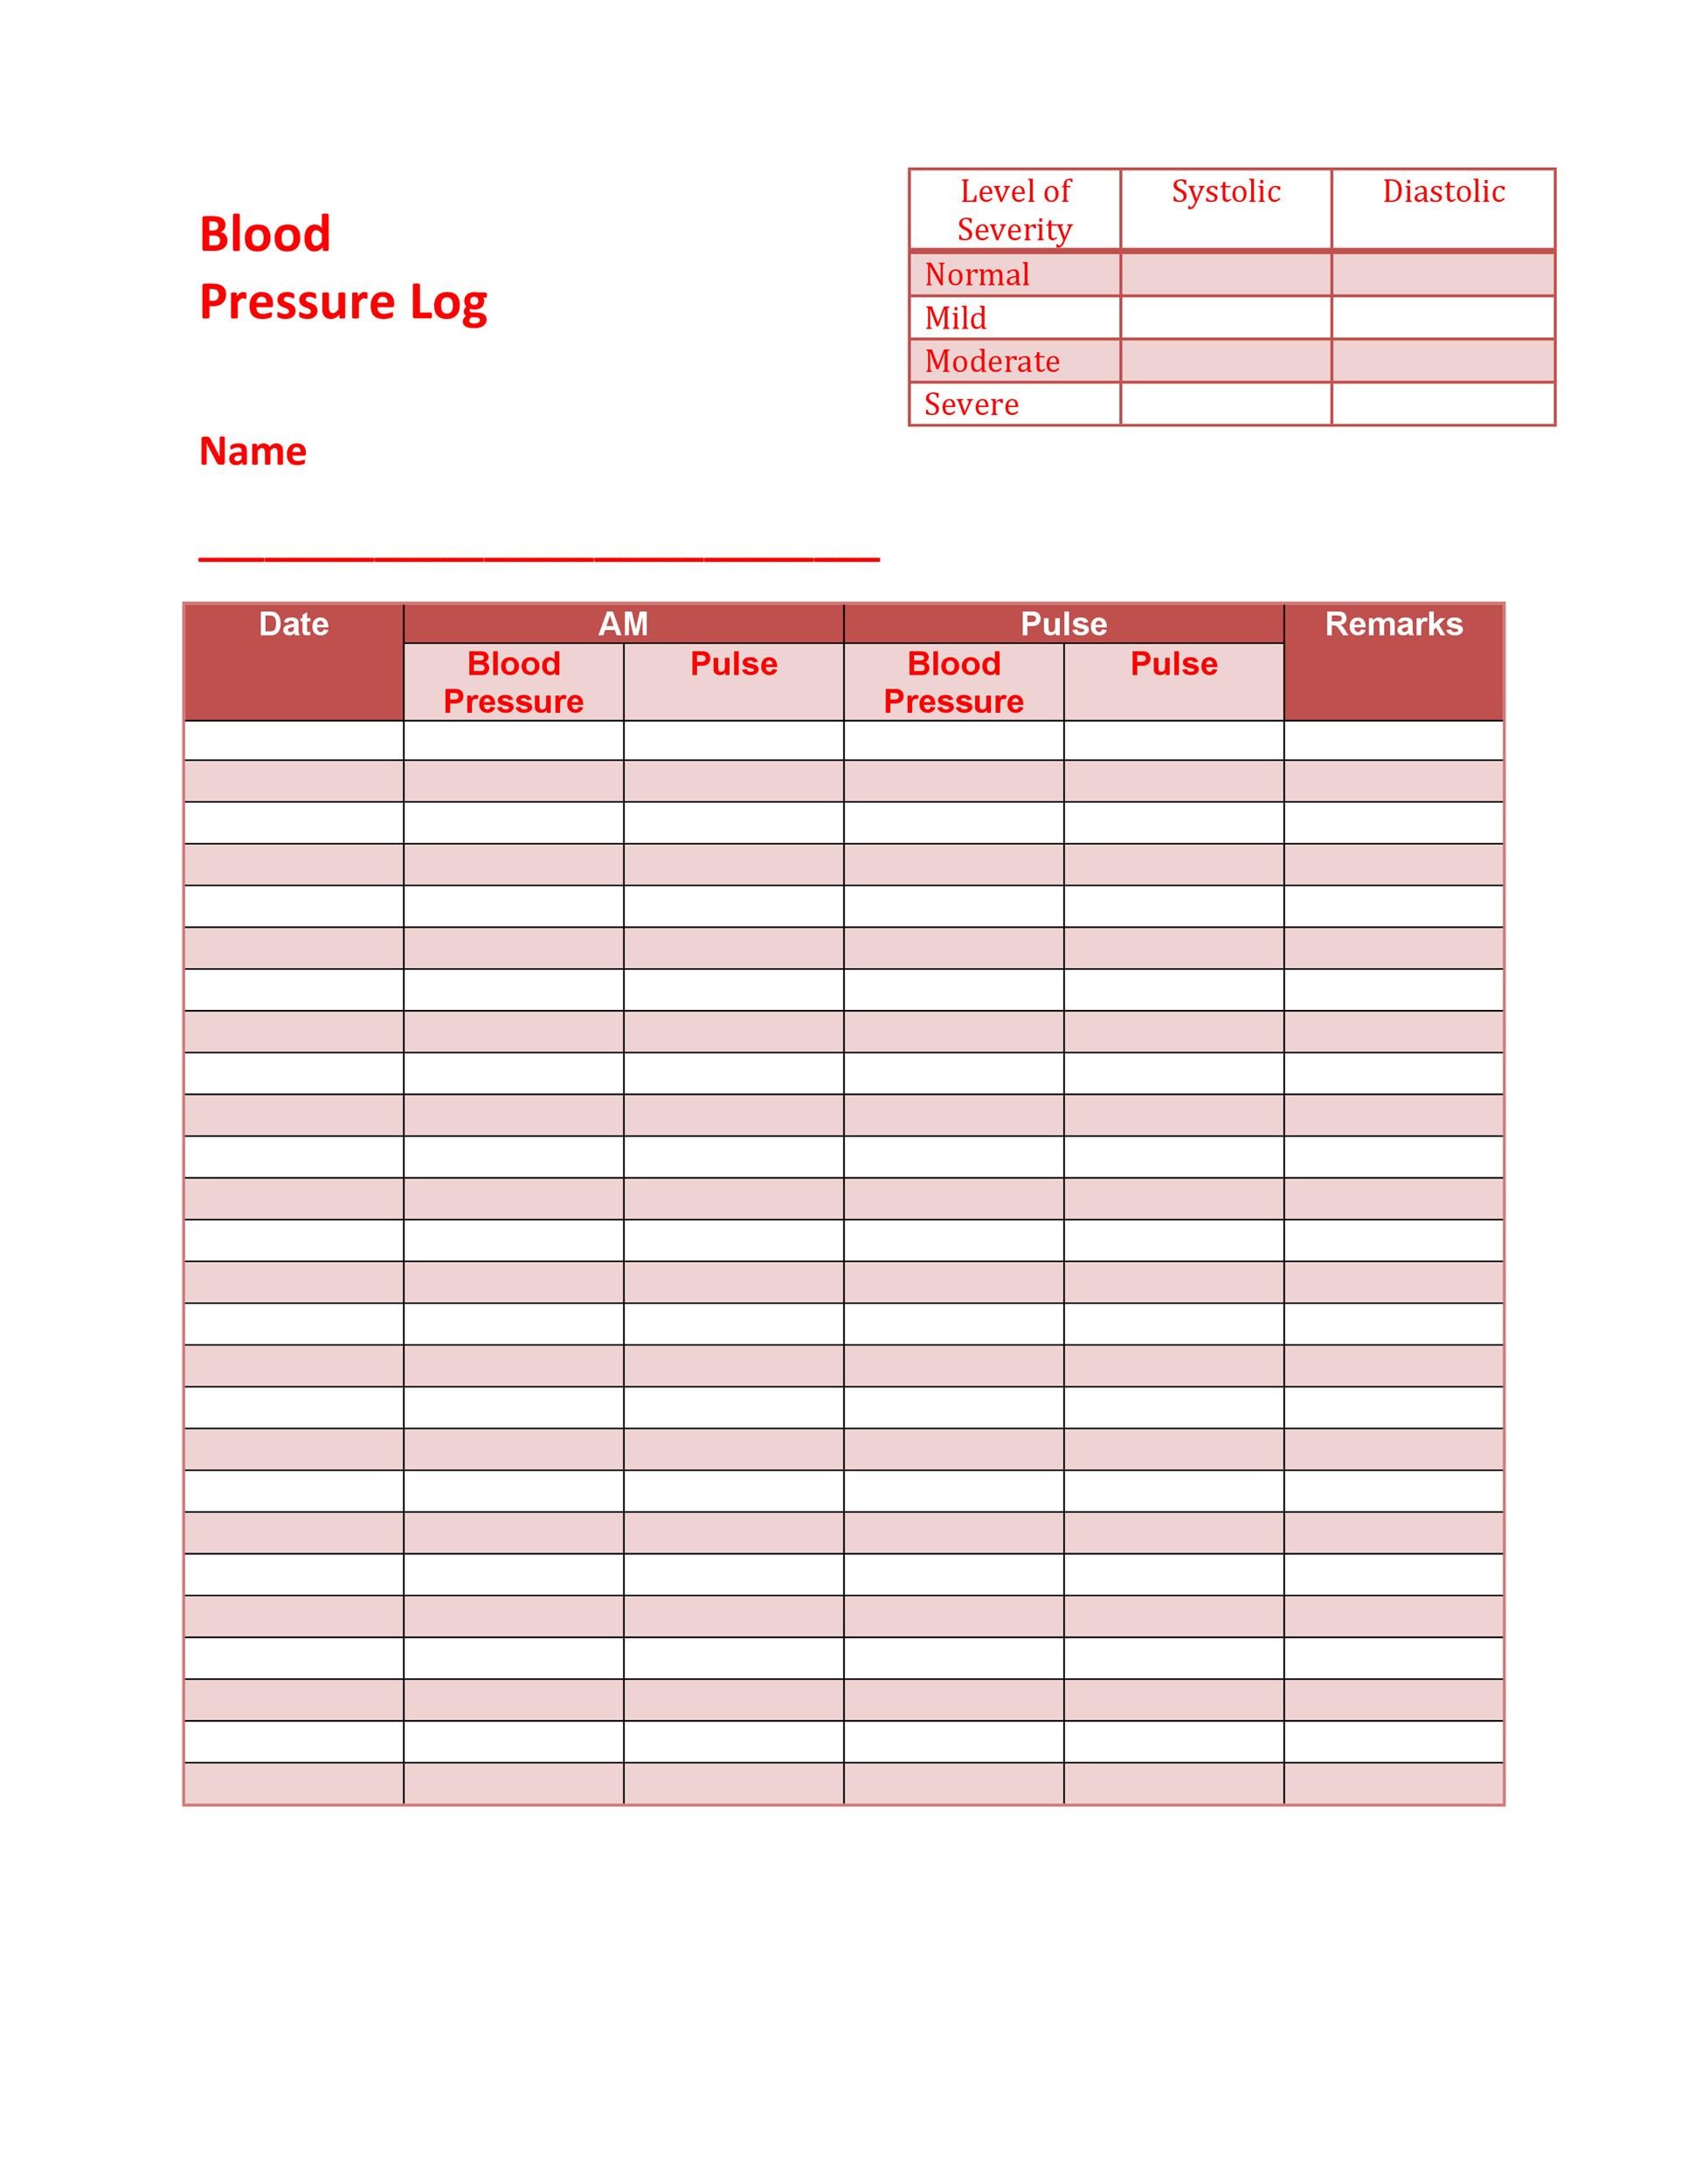  Blood pressure log excel template